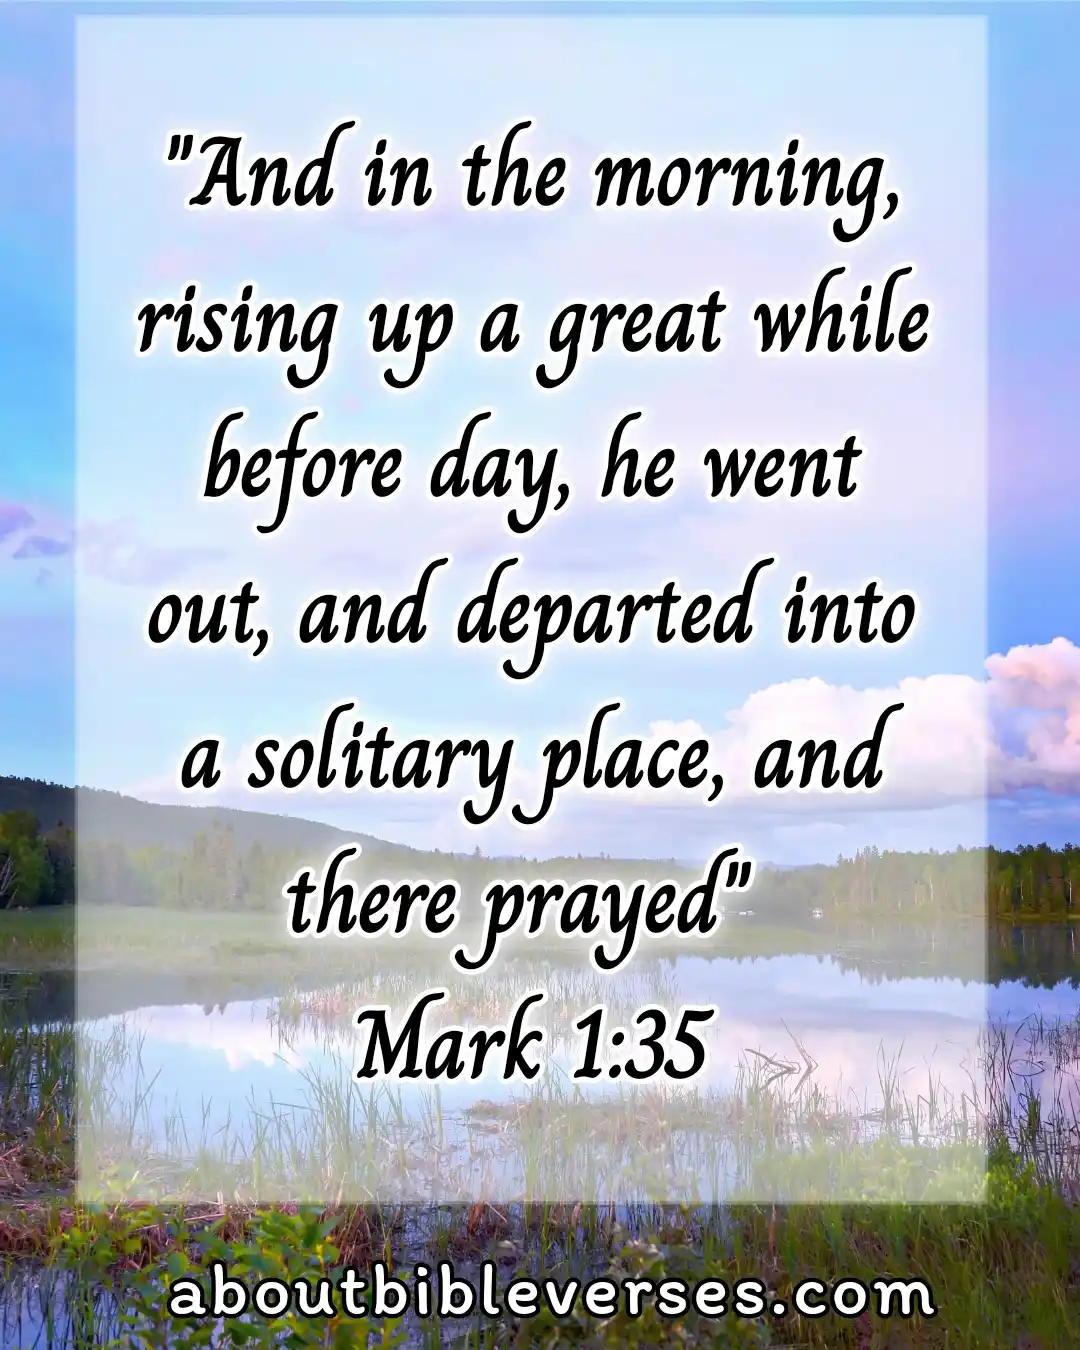 Good morning bible verses (Mark 1:35)